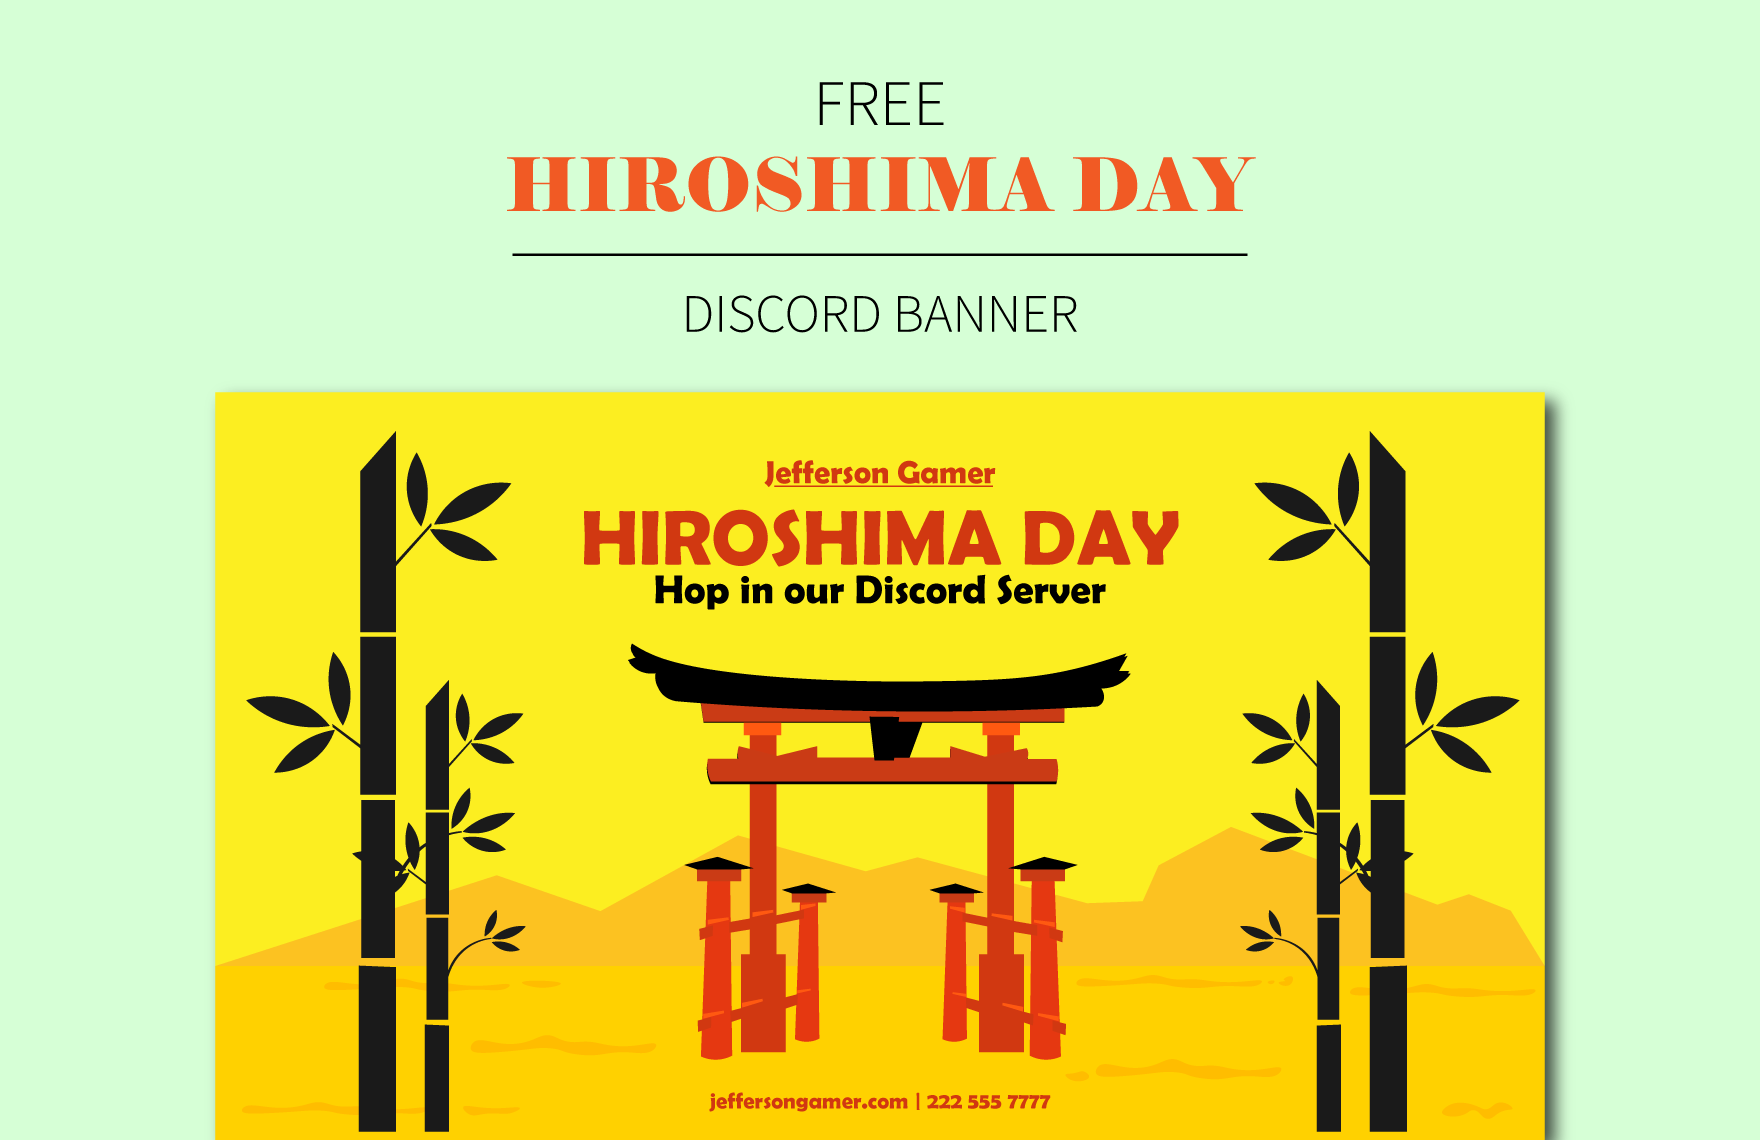 Free Hiroshima Day Discord Banner in PDF, Illustrator, SVG, JPG